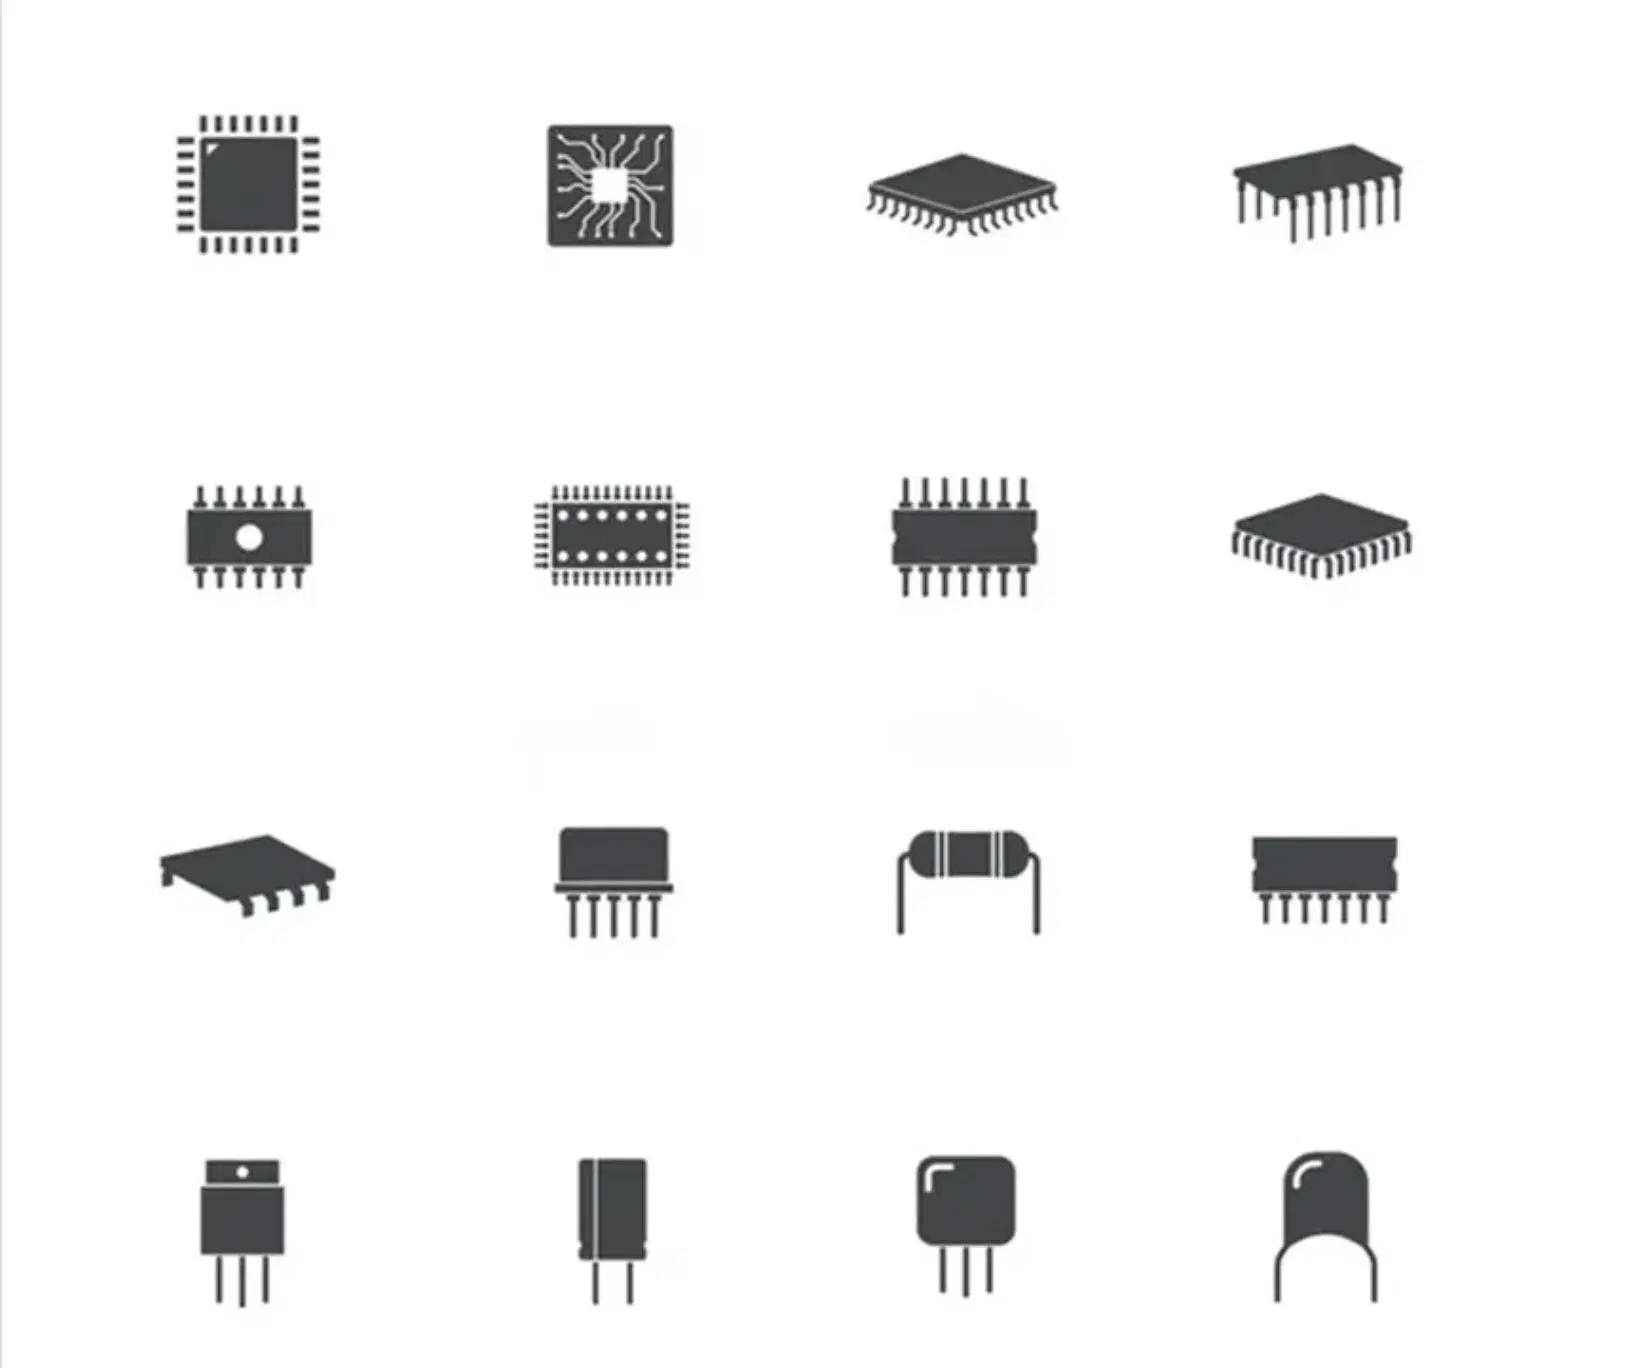 New and Original Pic10f220t-I/Ot Microcontroller Integrated Circuits